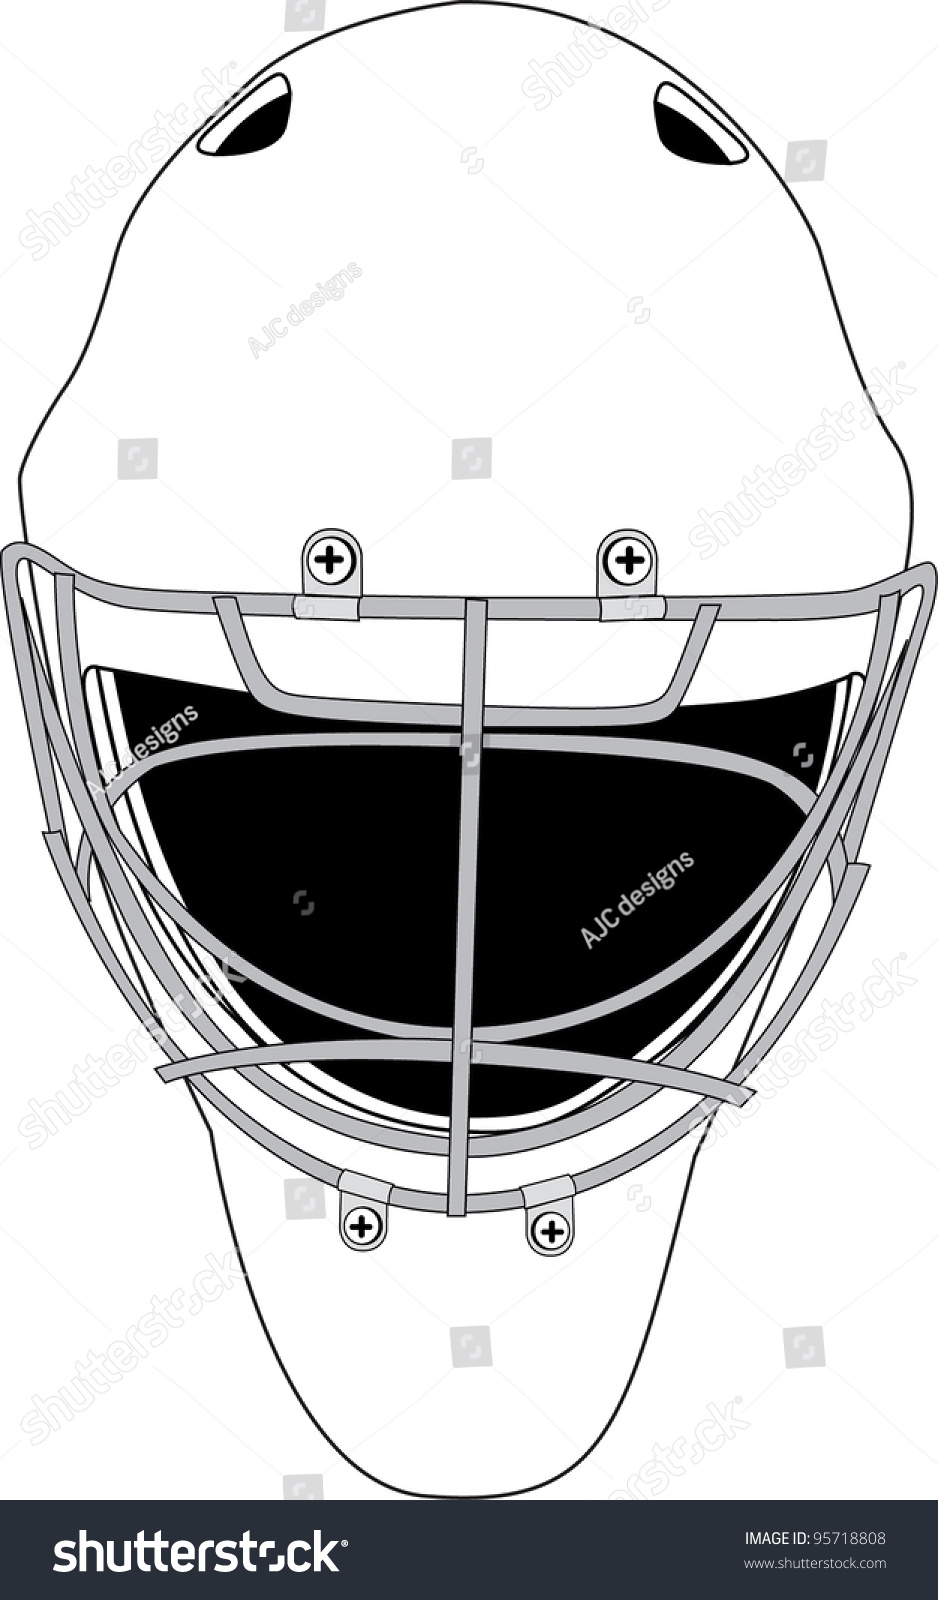 Download Goalie Mask Stock Vector 95718808 - Shutterstock